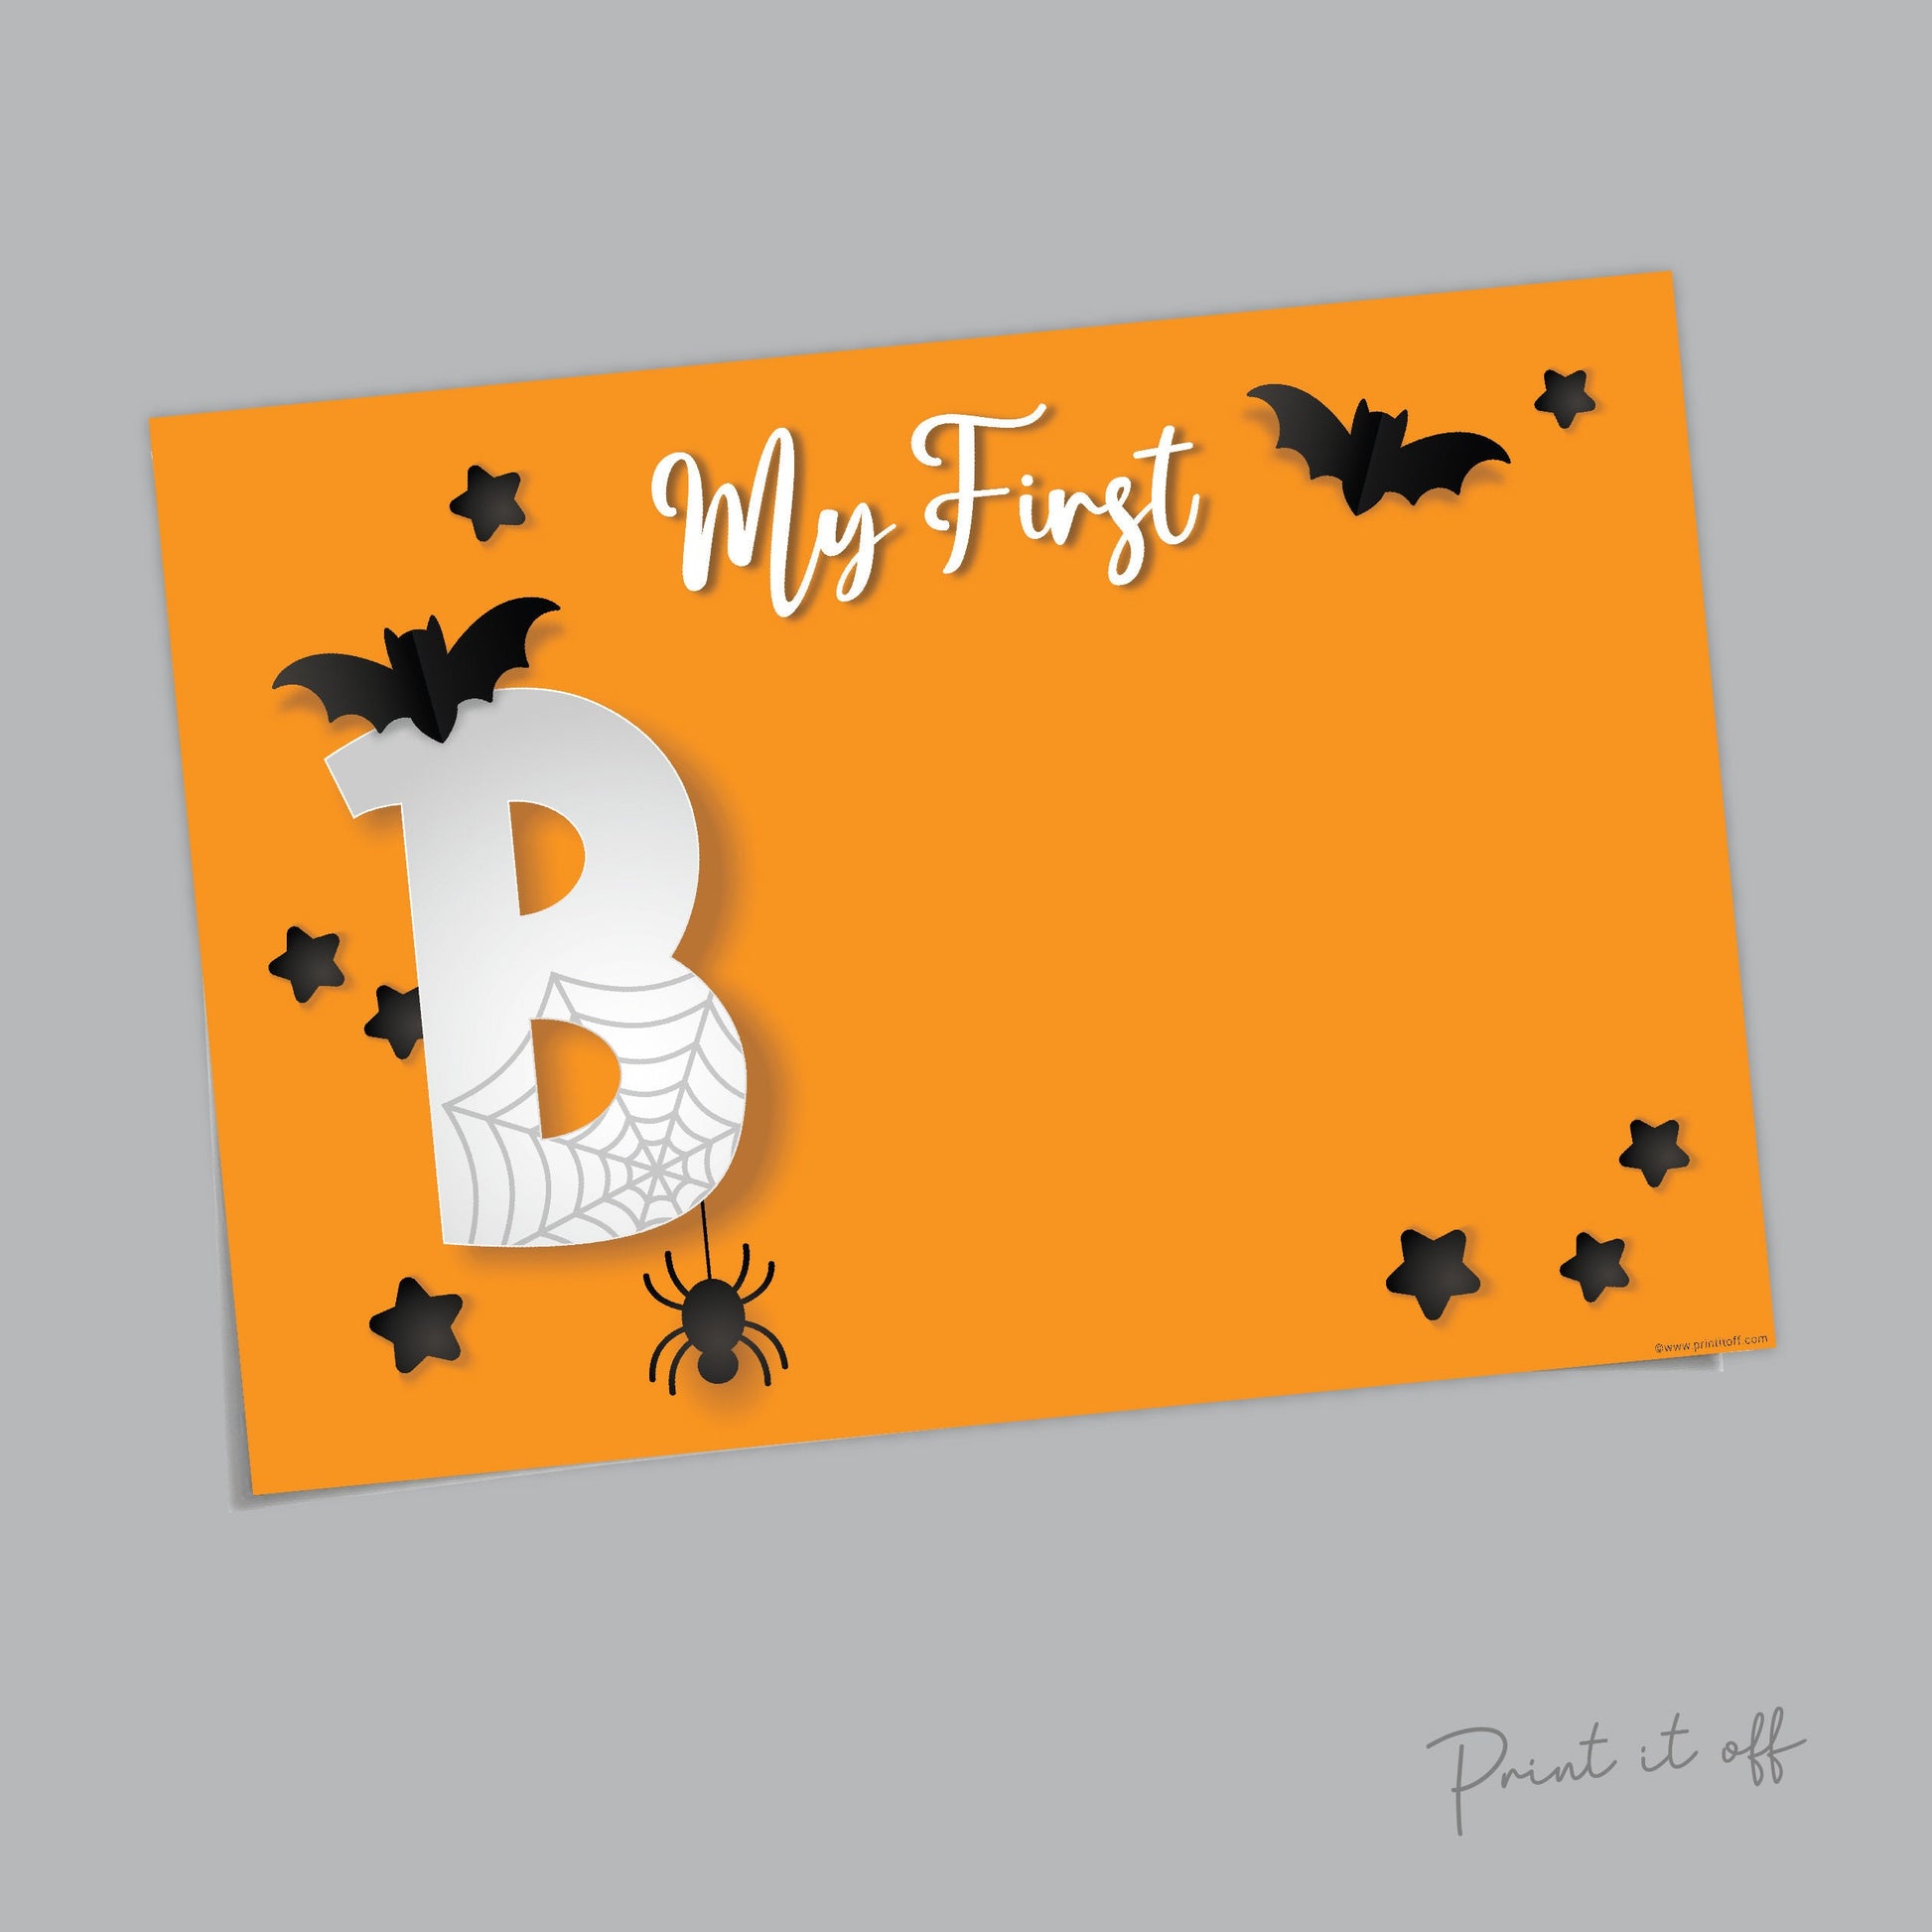 My First Boo / 1st Halloween Ghost Footprint Handprint Art Craft Child Baby Card Memory Activity Keepsake Decor DIY / Print It Off 0585